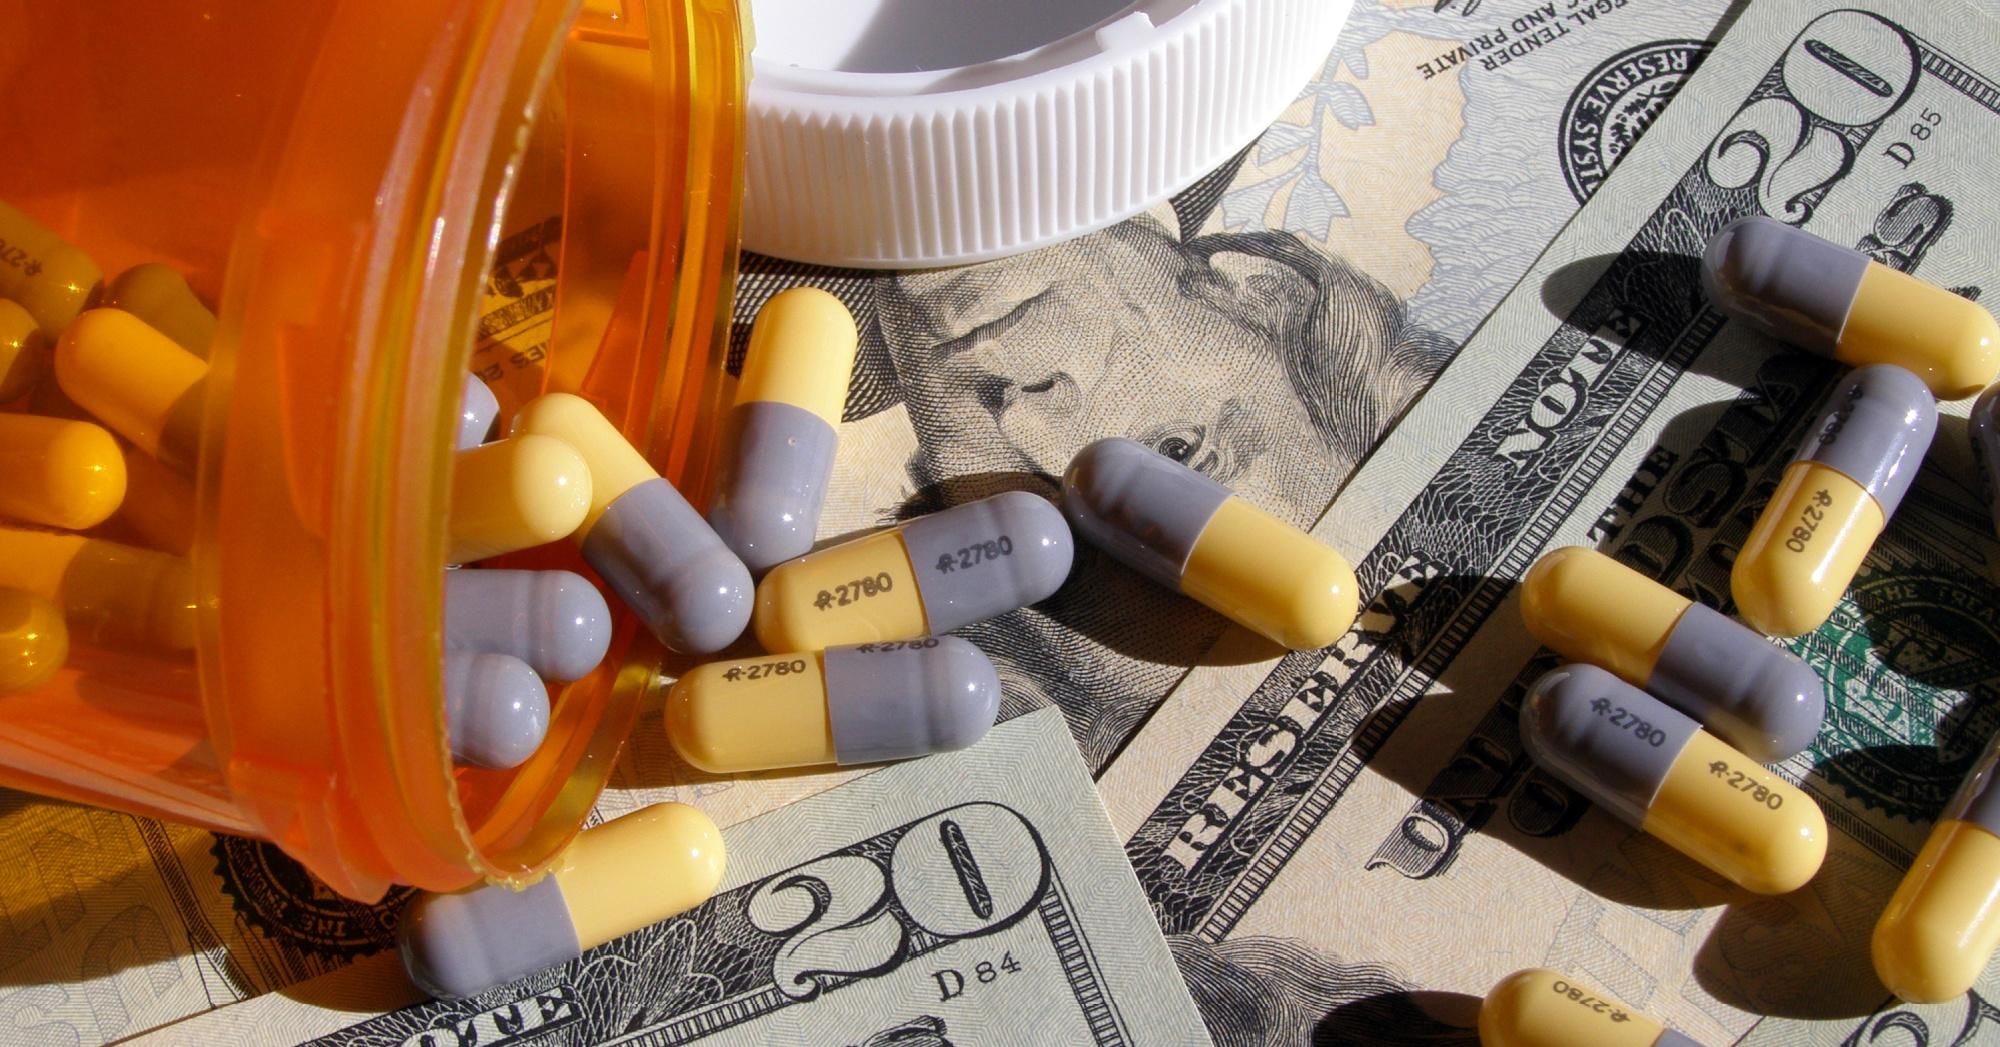 Prescription pills shown with $20 bills.